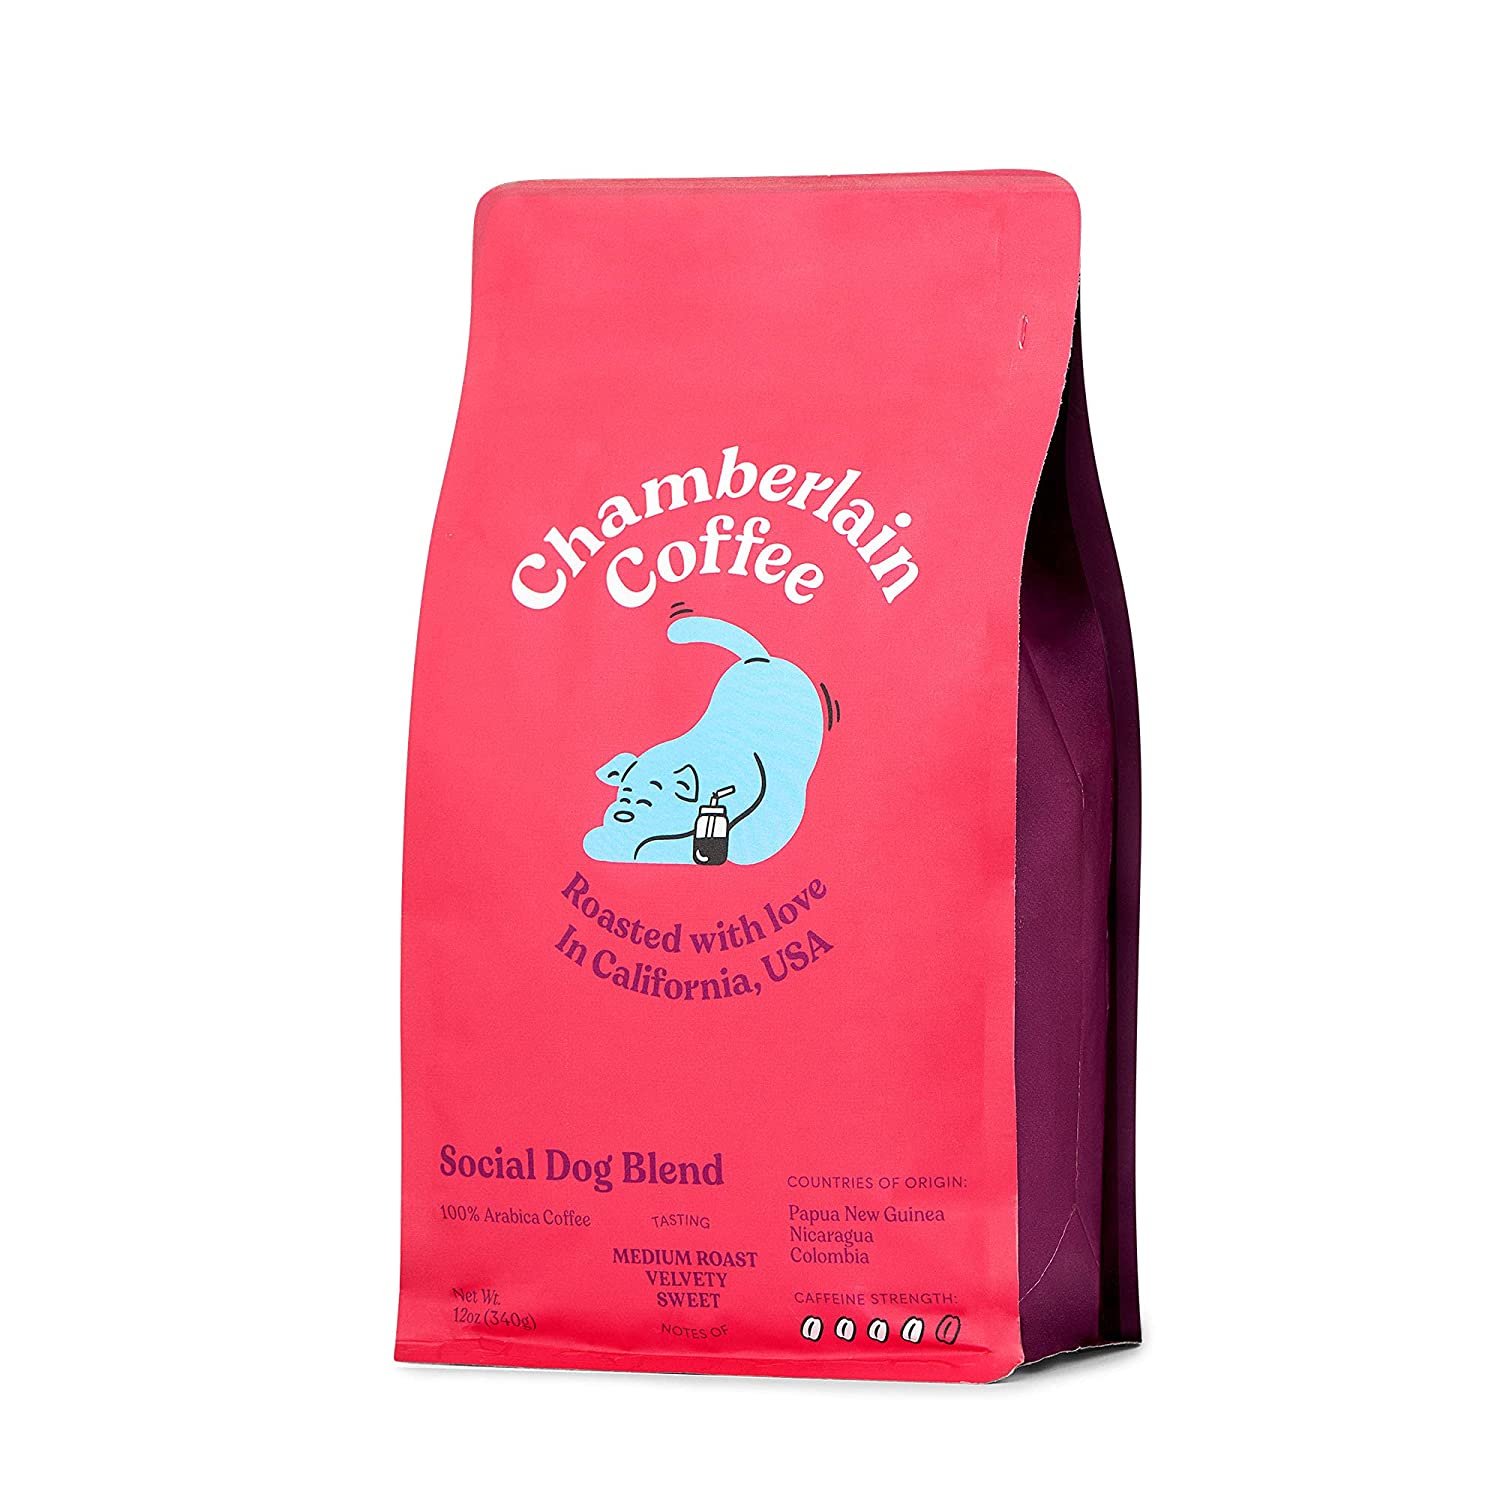 Chamberlain coffee